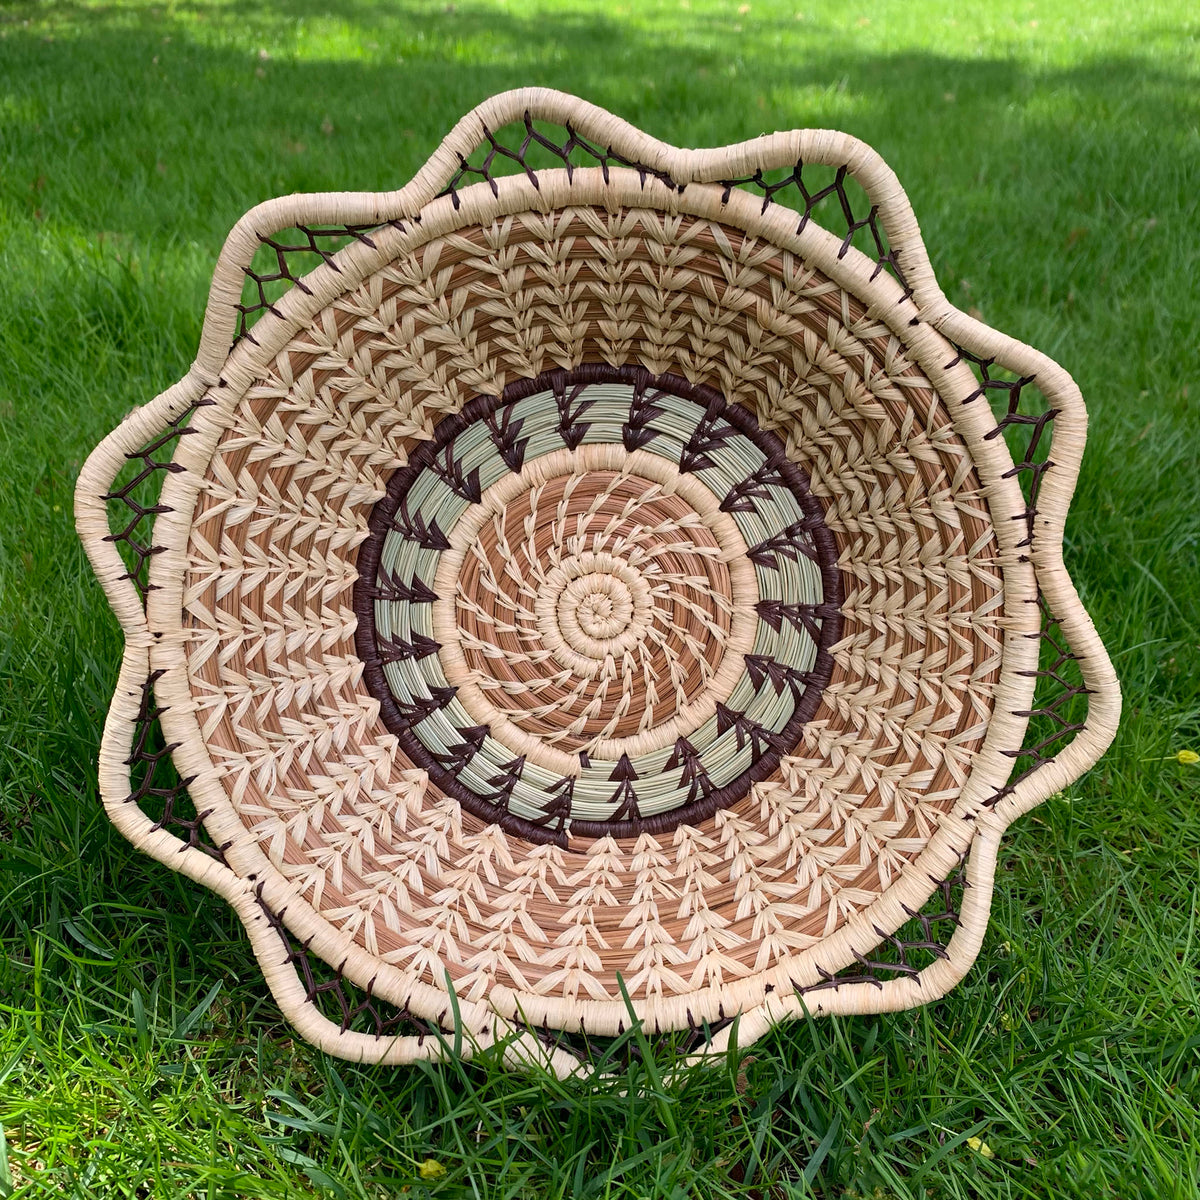 Pine needle handmade basket with traditional designs